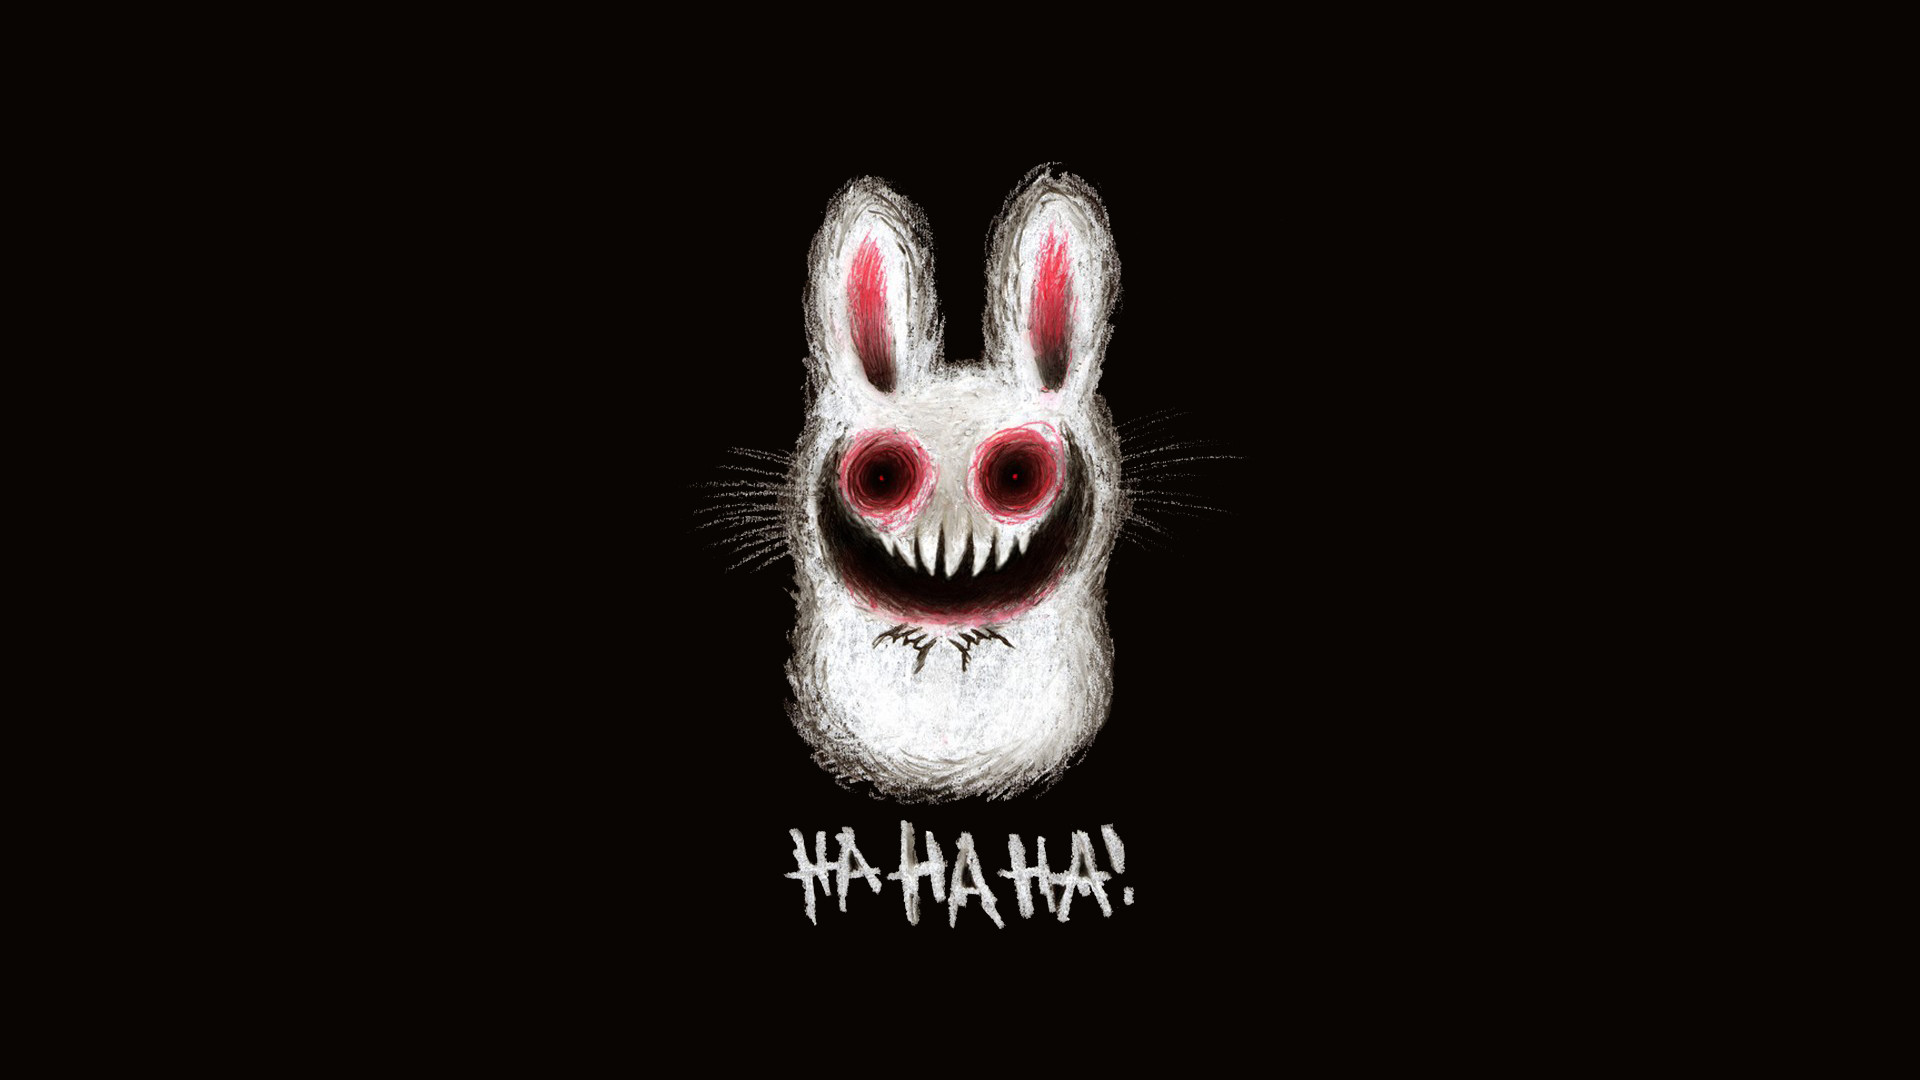 Creepy bunny wallpaper, cute adorable fluffy scary bunny rabbit